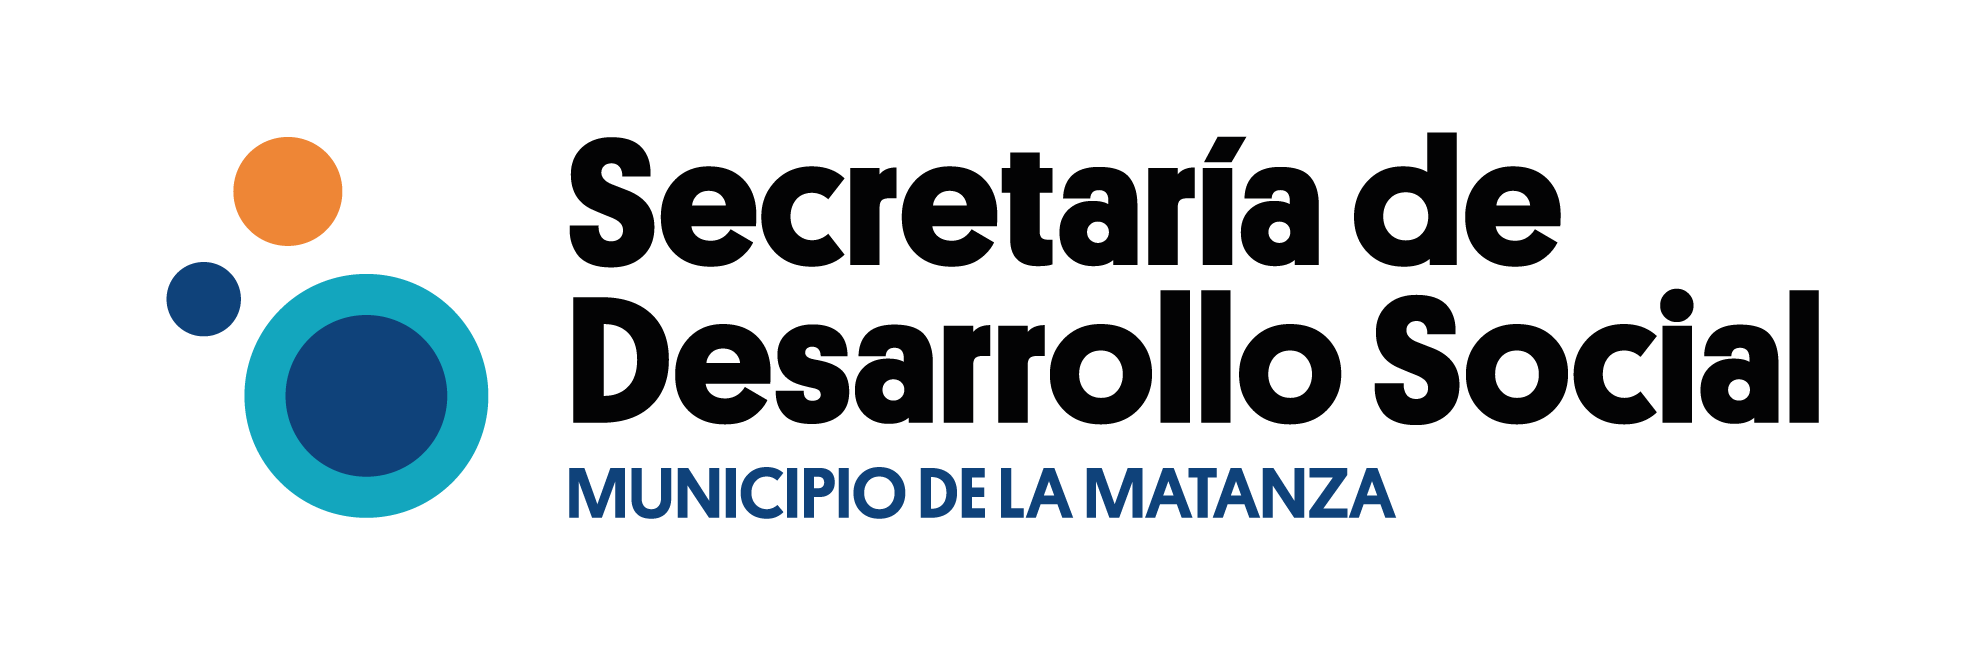 Desarrollo Social | Municipio de La Matanza